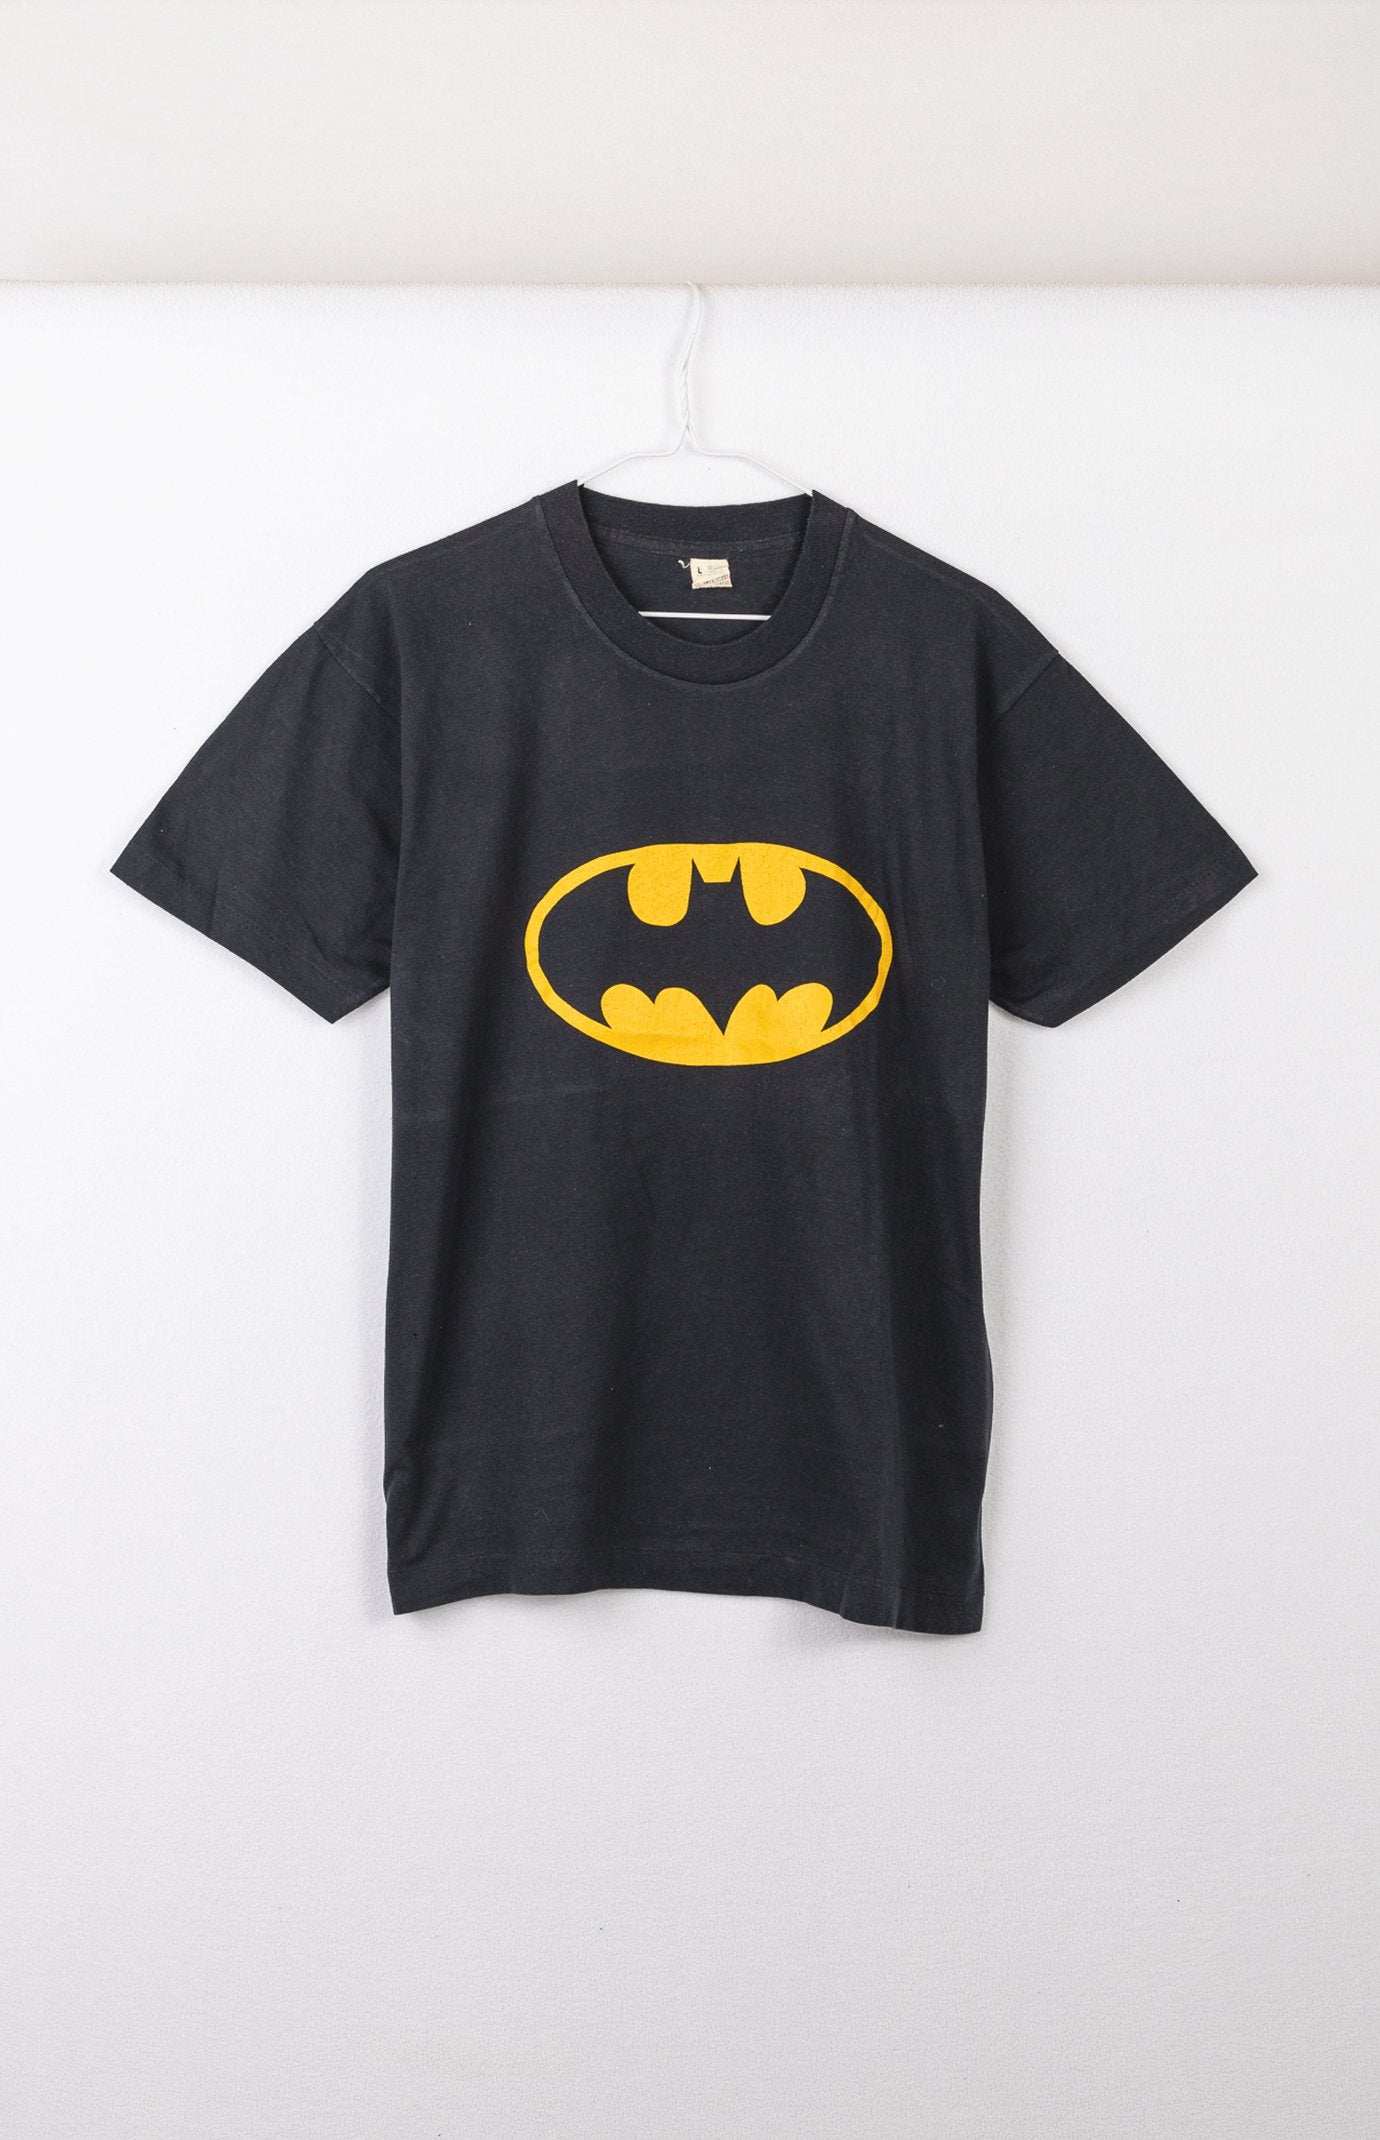 Batman Vintage Bat Logo on Gray Women's T-Shirt | T shirts for women, Shirts,  Grey women